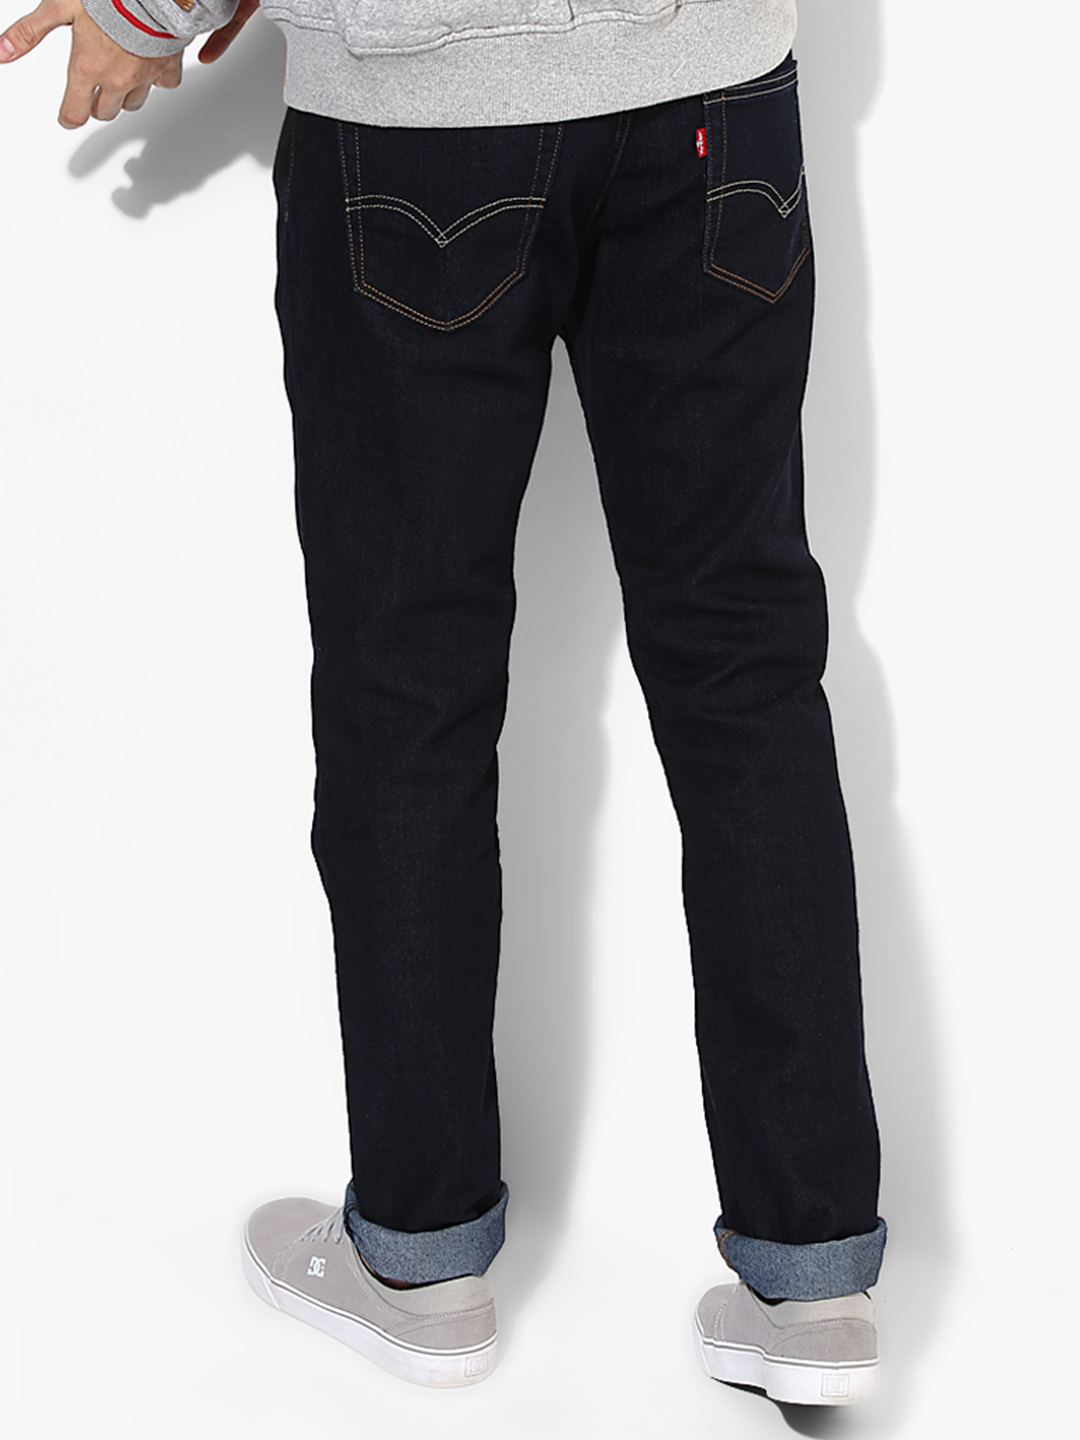 Levis black plain denim jeans - G3-MJE1262 | G3fashion.com